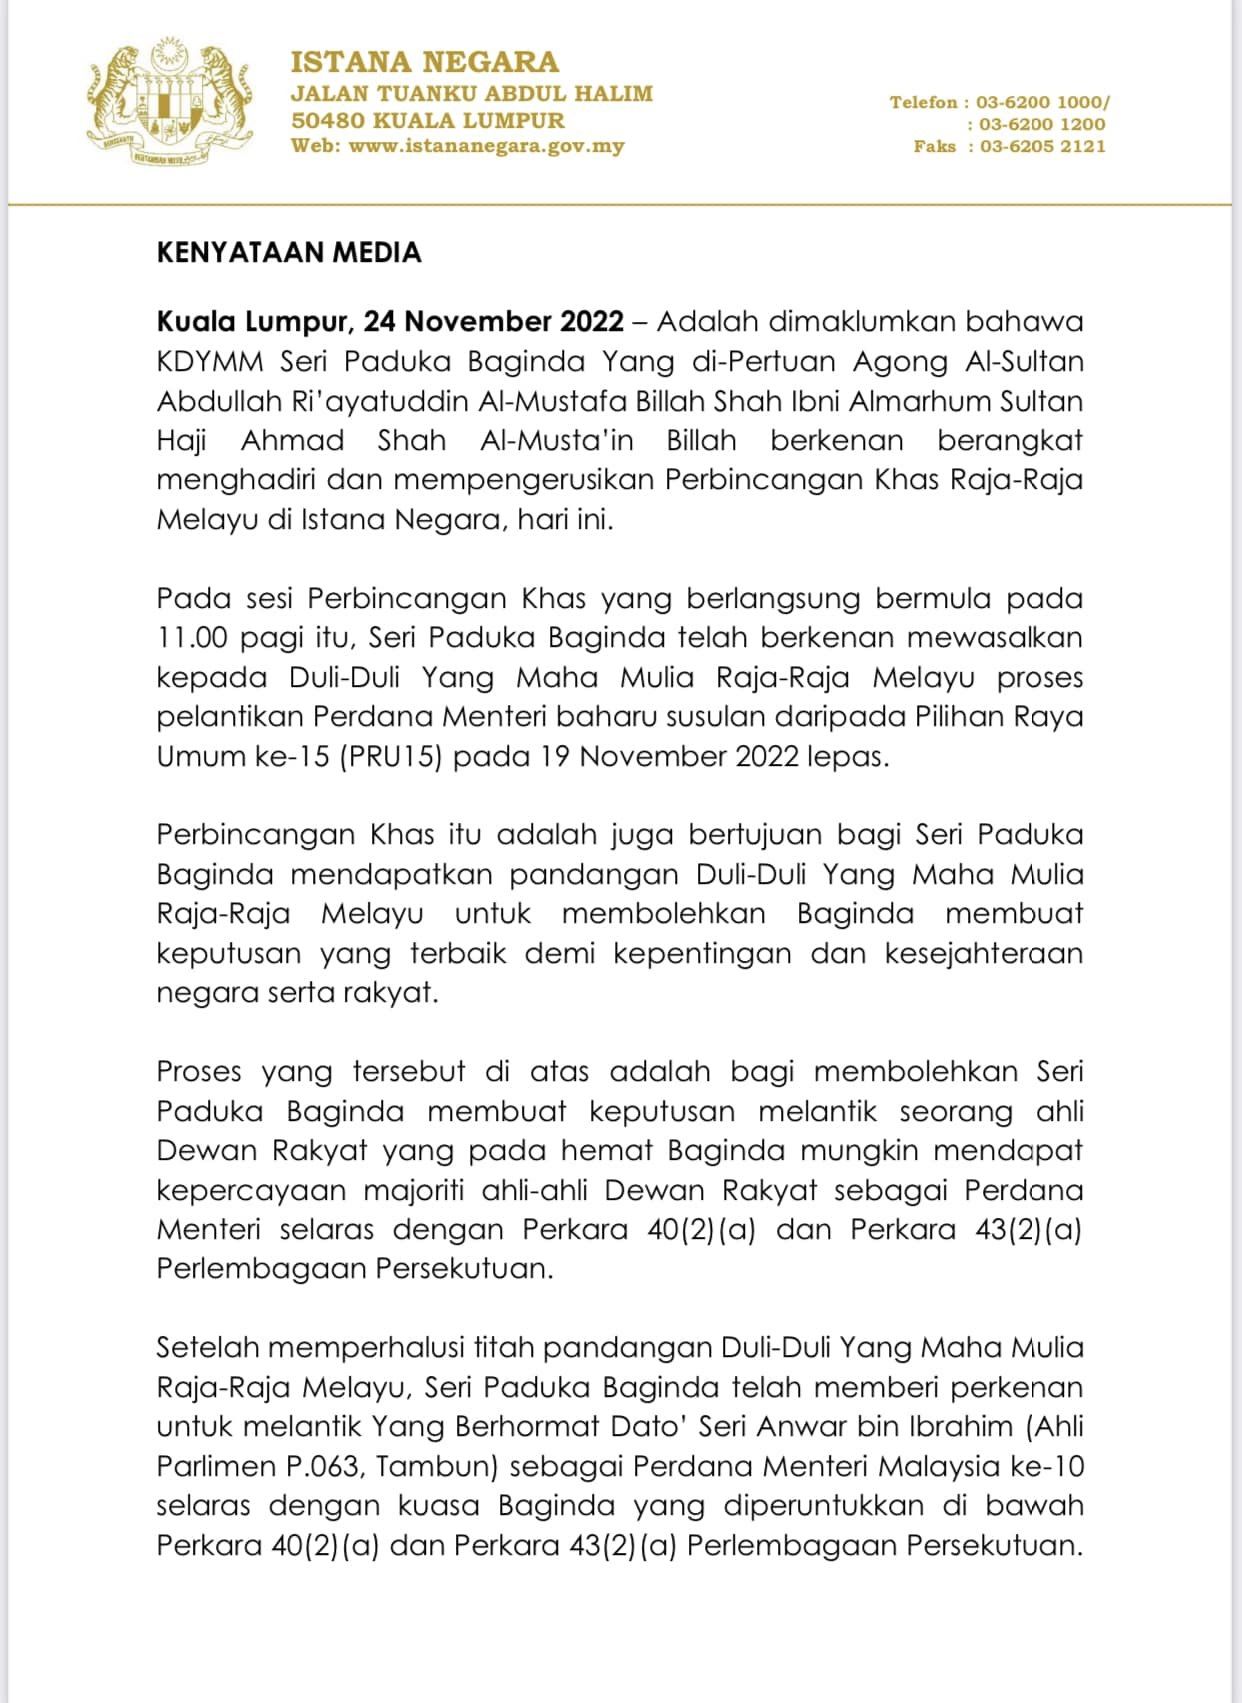 Anwar Ibrahim Prime Minister - Istana Negara statement